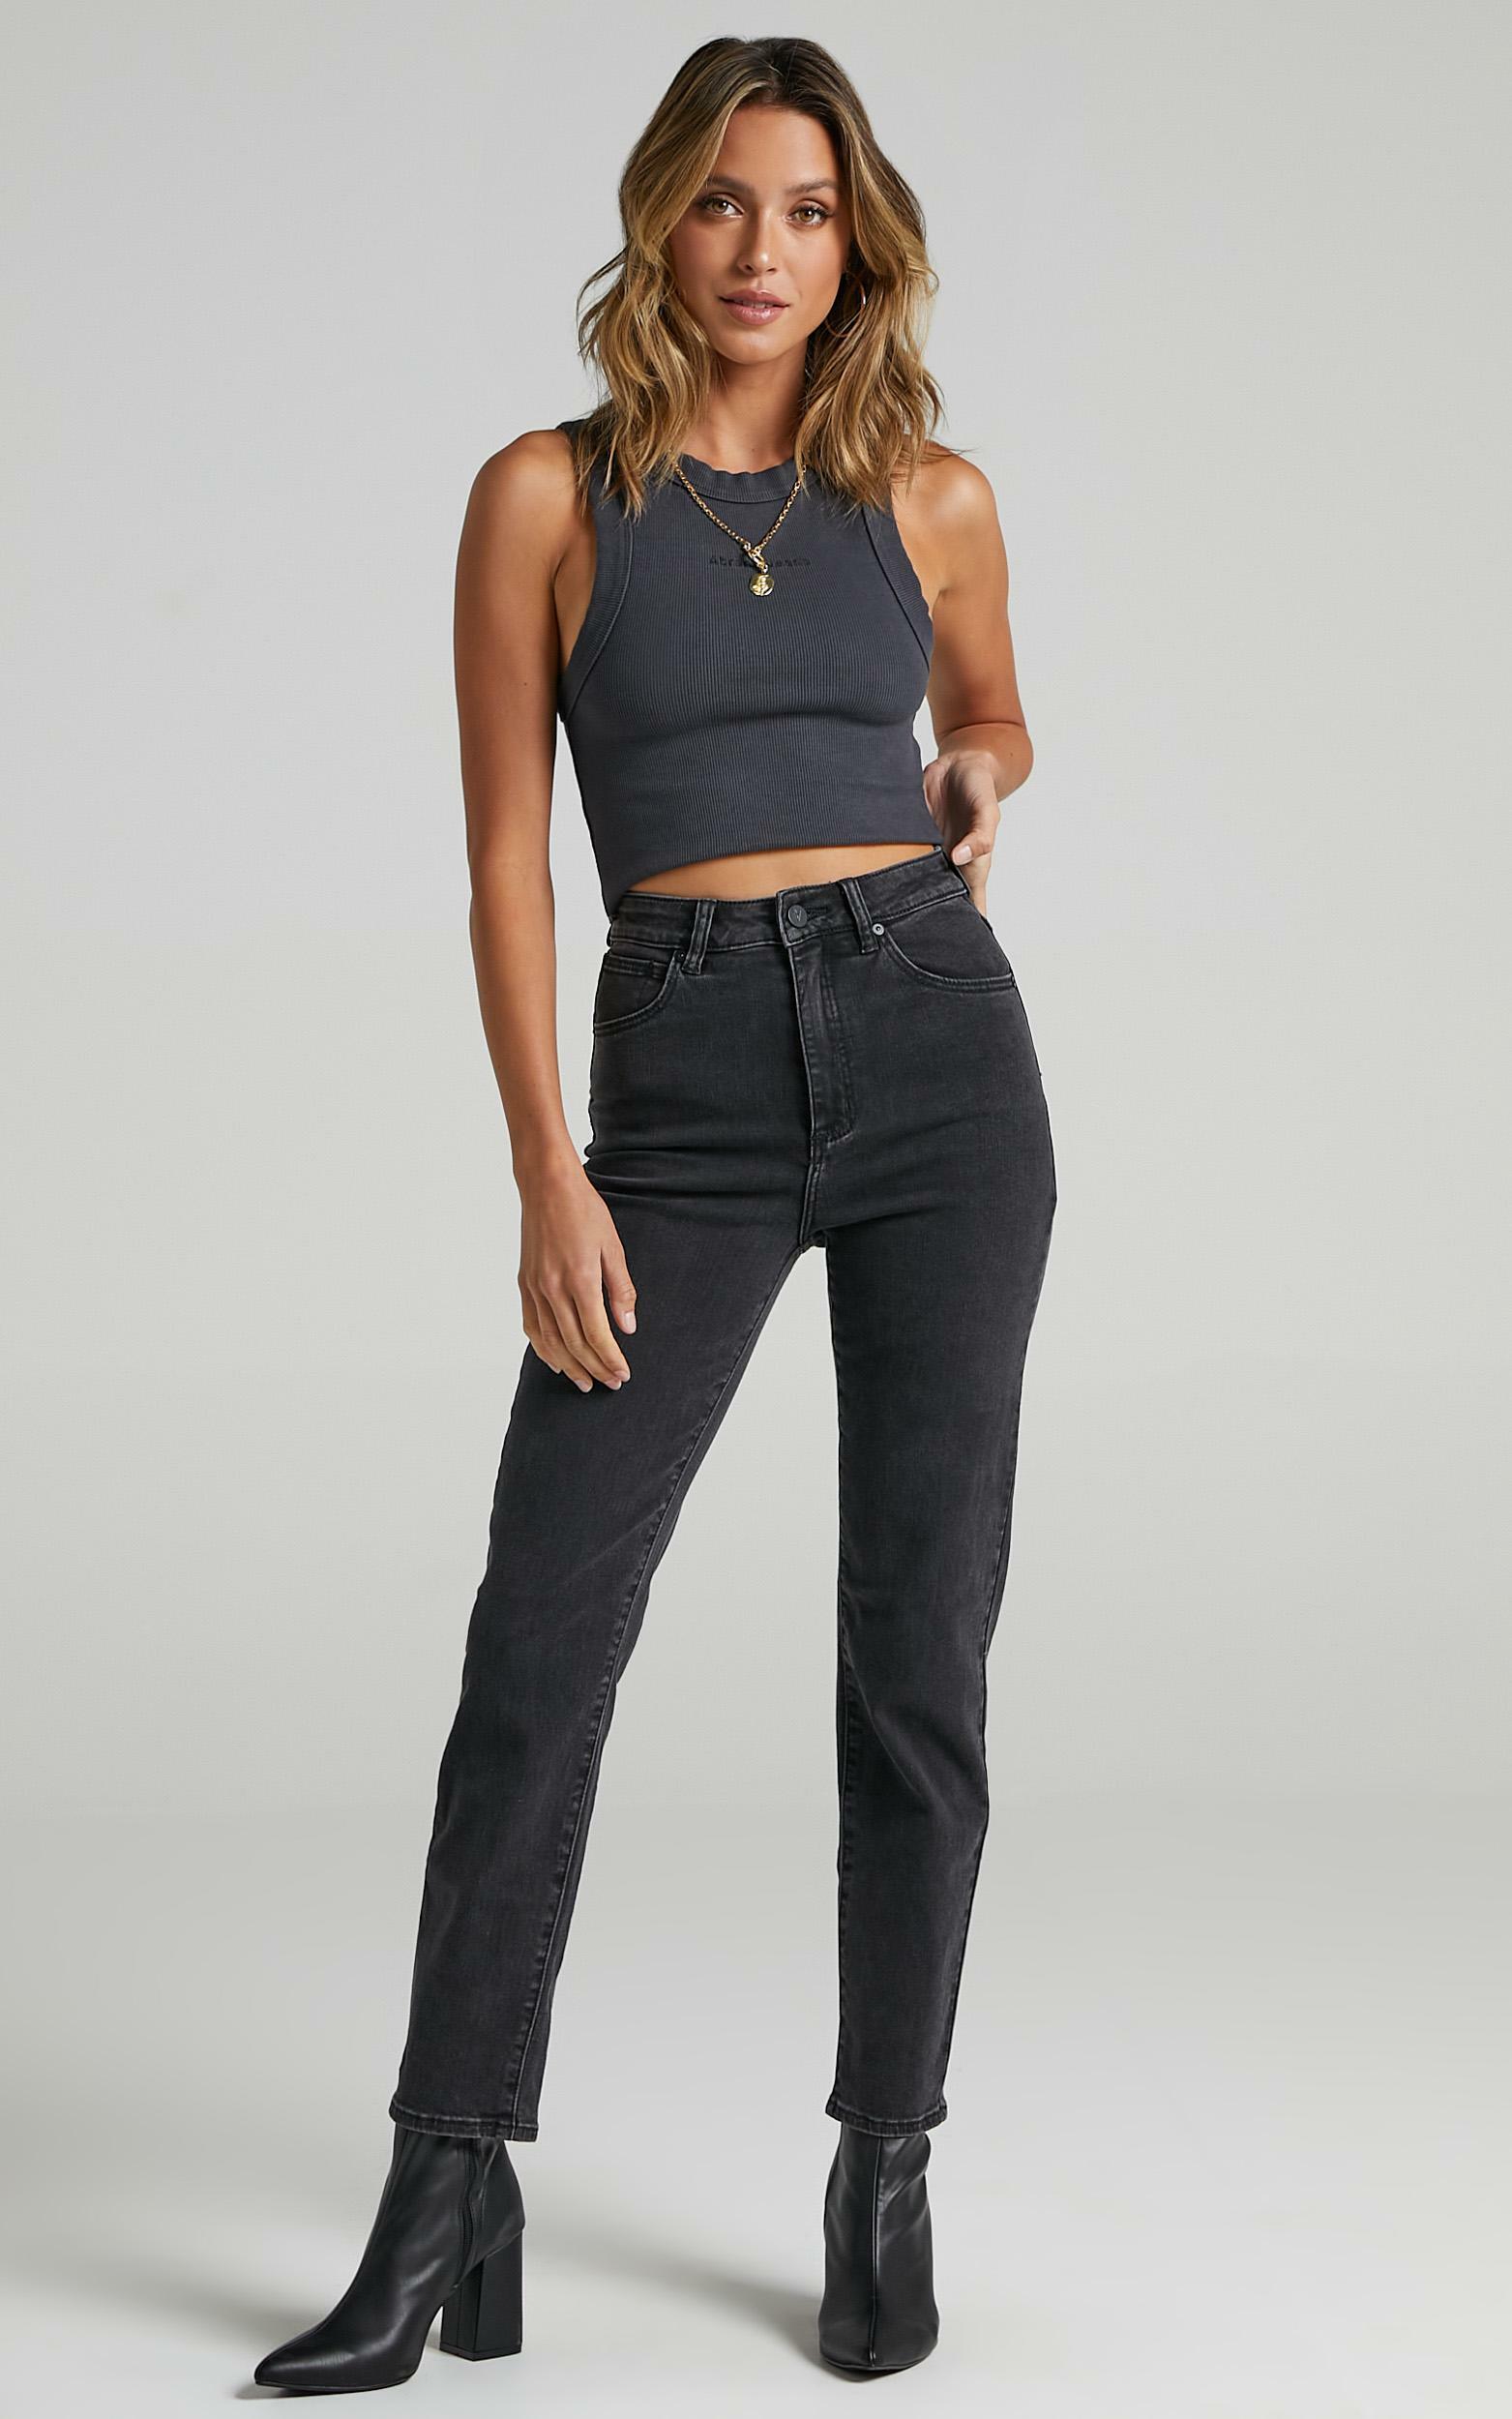 Abrand - A `94 High Slim Jeans in 90210 Black - 06, BLK1, hi-res image number null